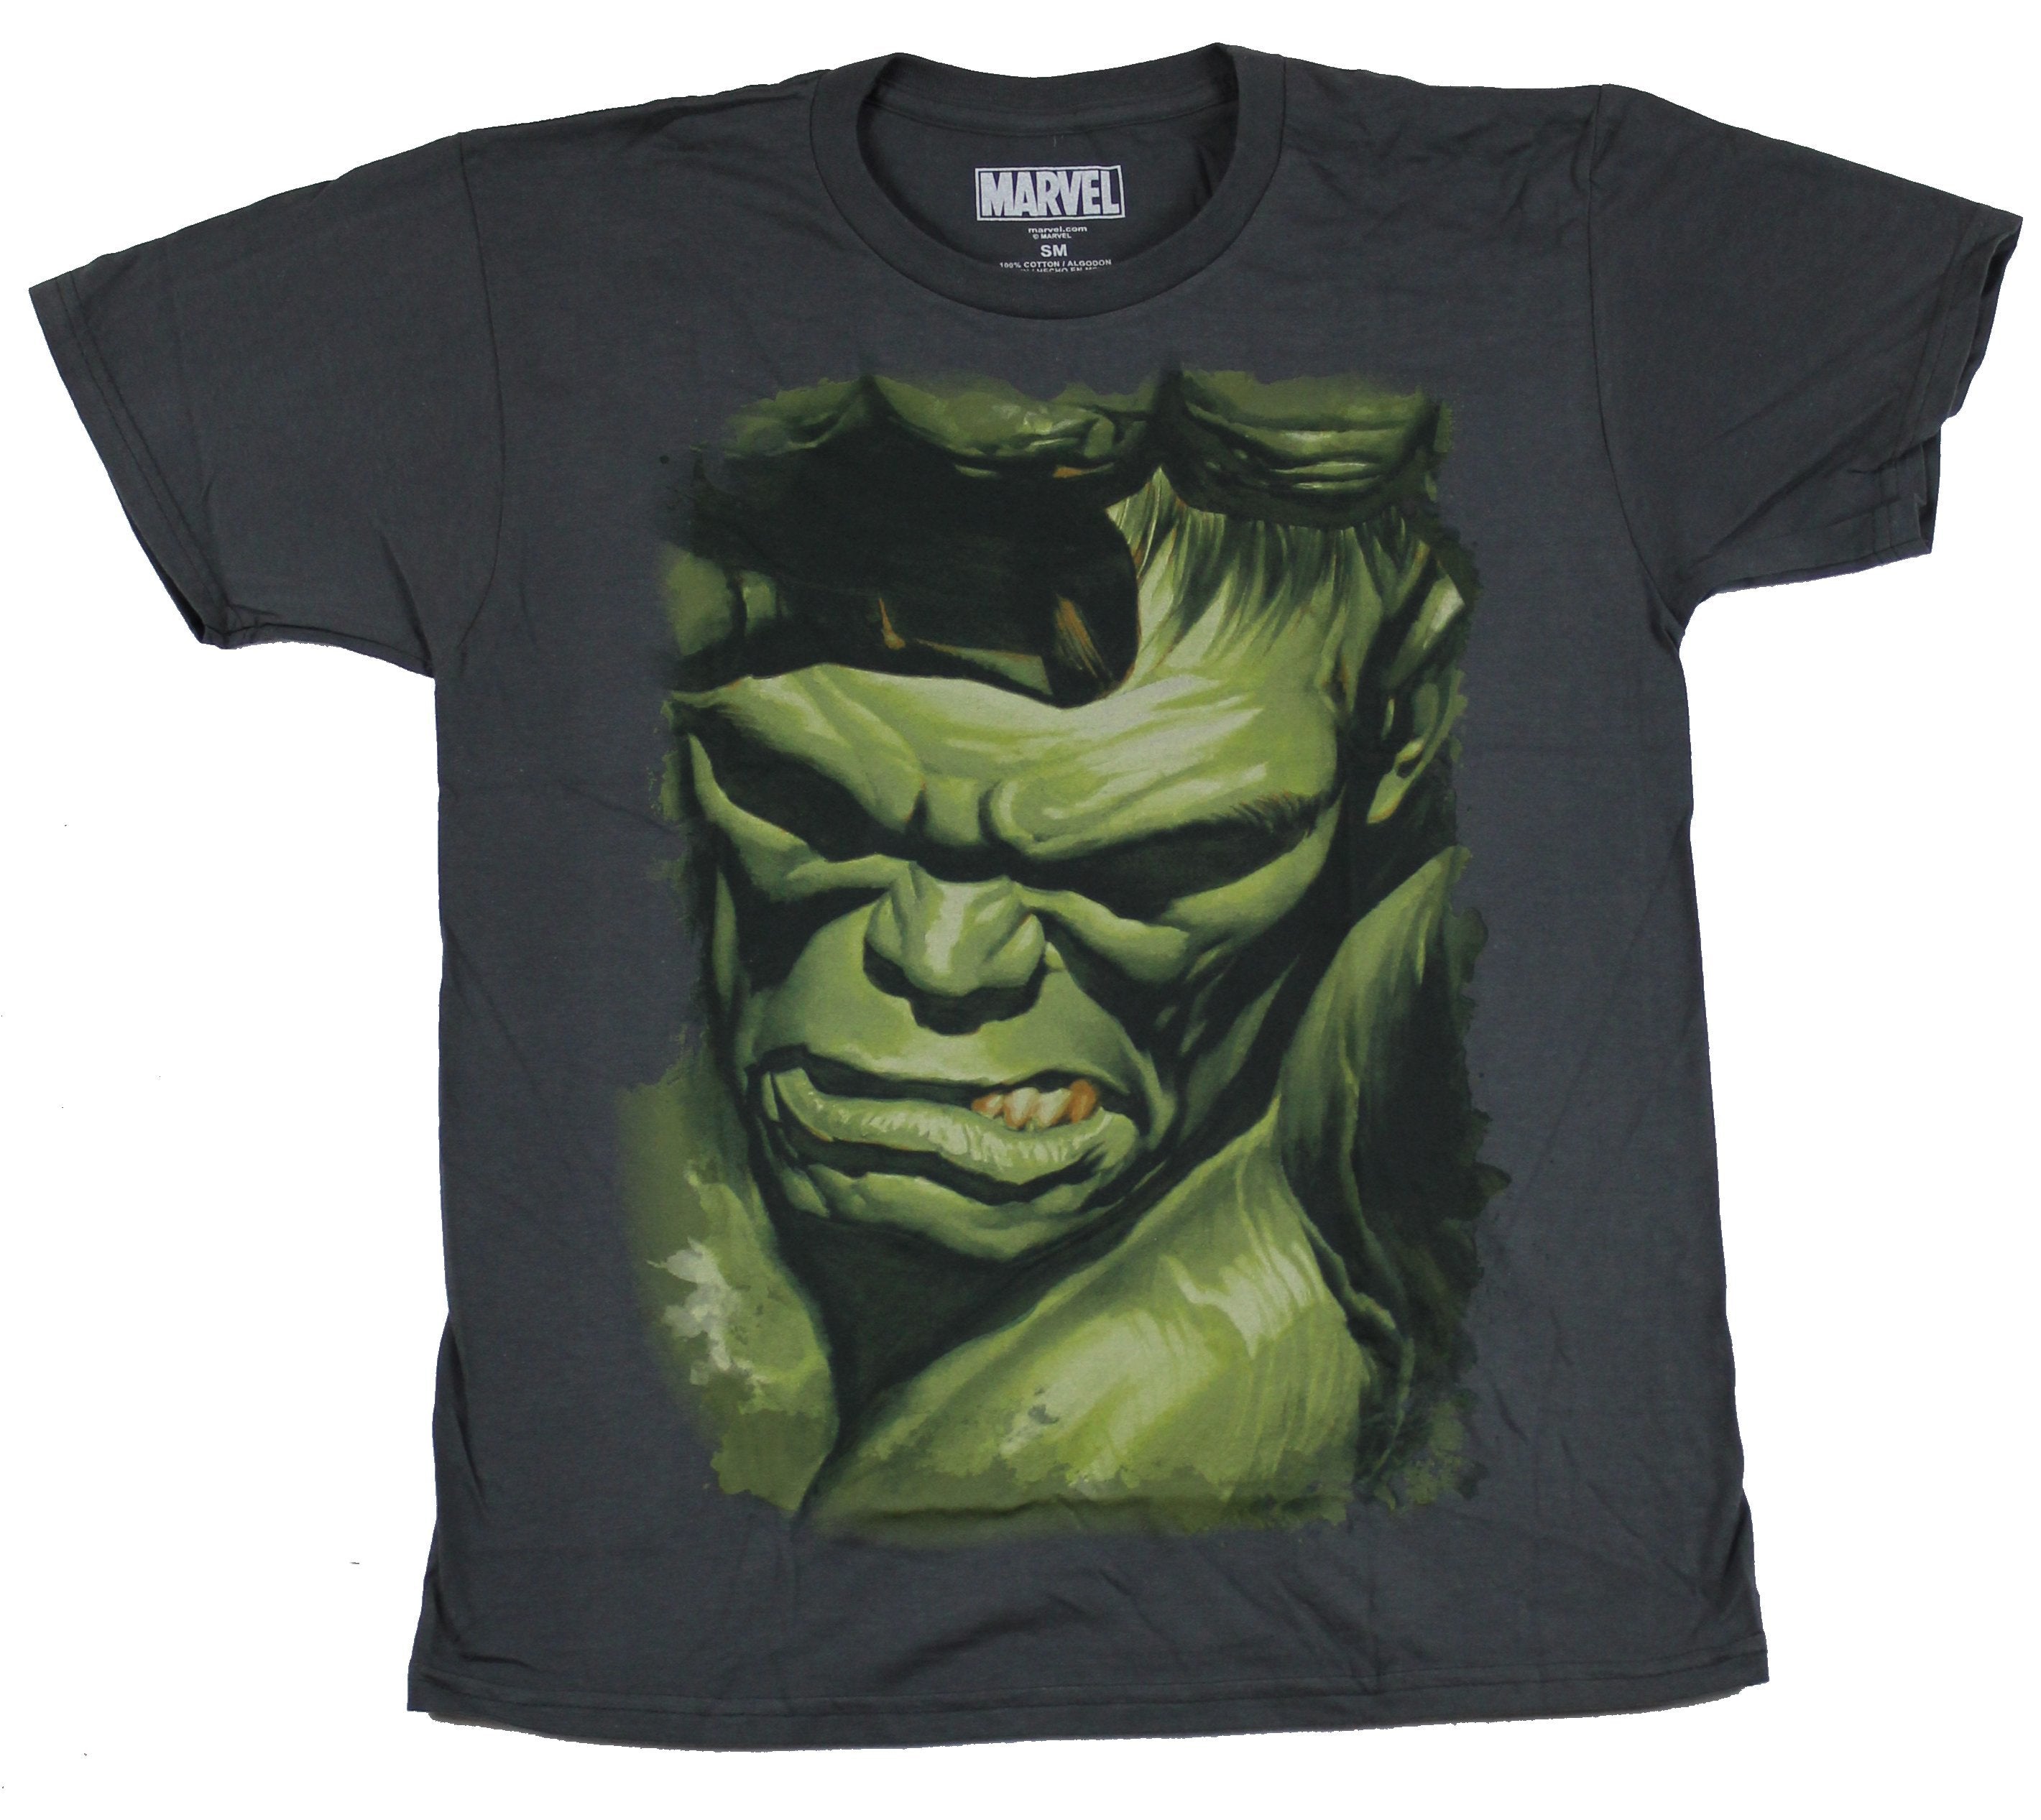 Hulk (Marvel Comics) Mens T-Shirt - Giant Serious Grimmace Face